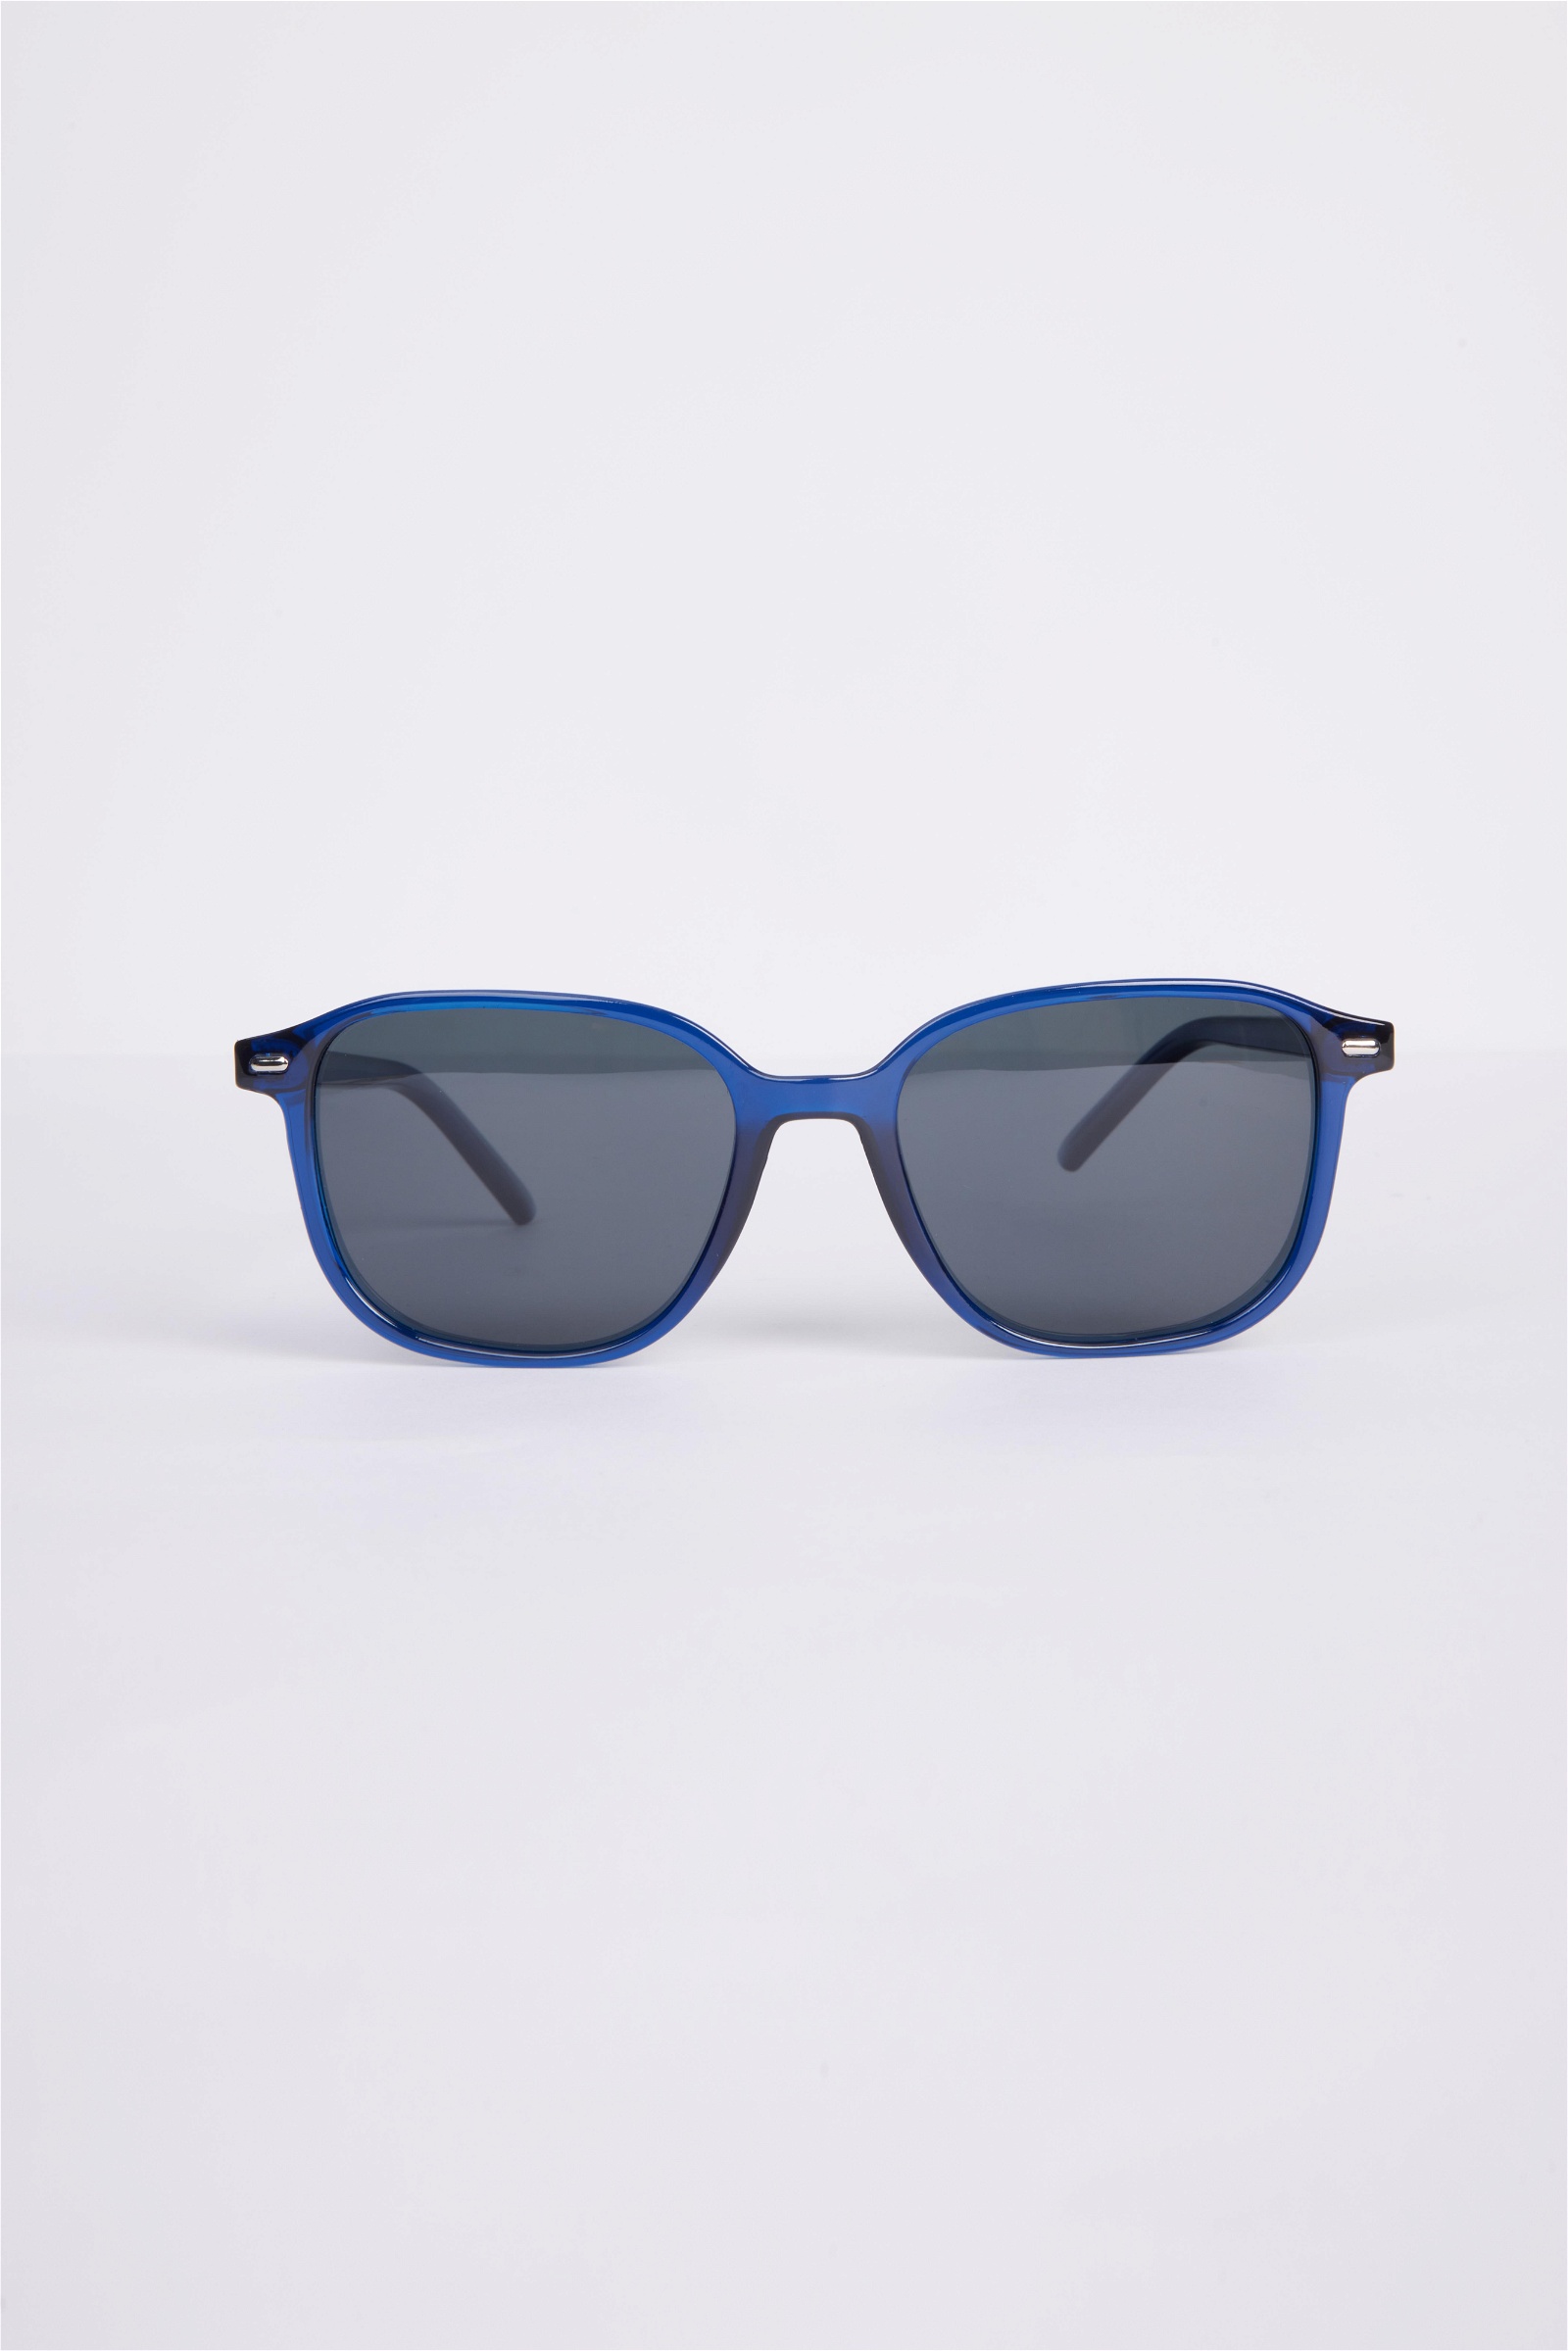 Plain Navy Blue Sunglasses